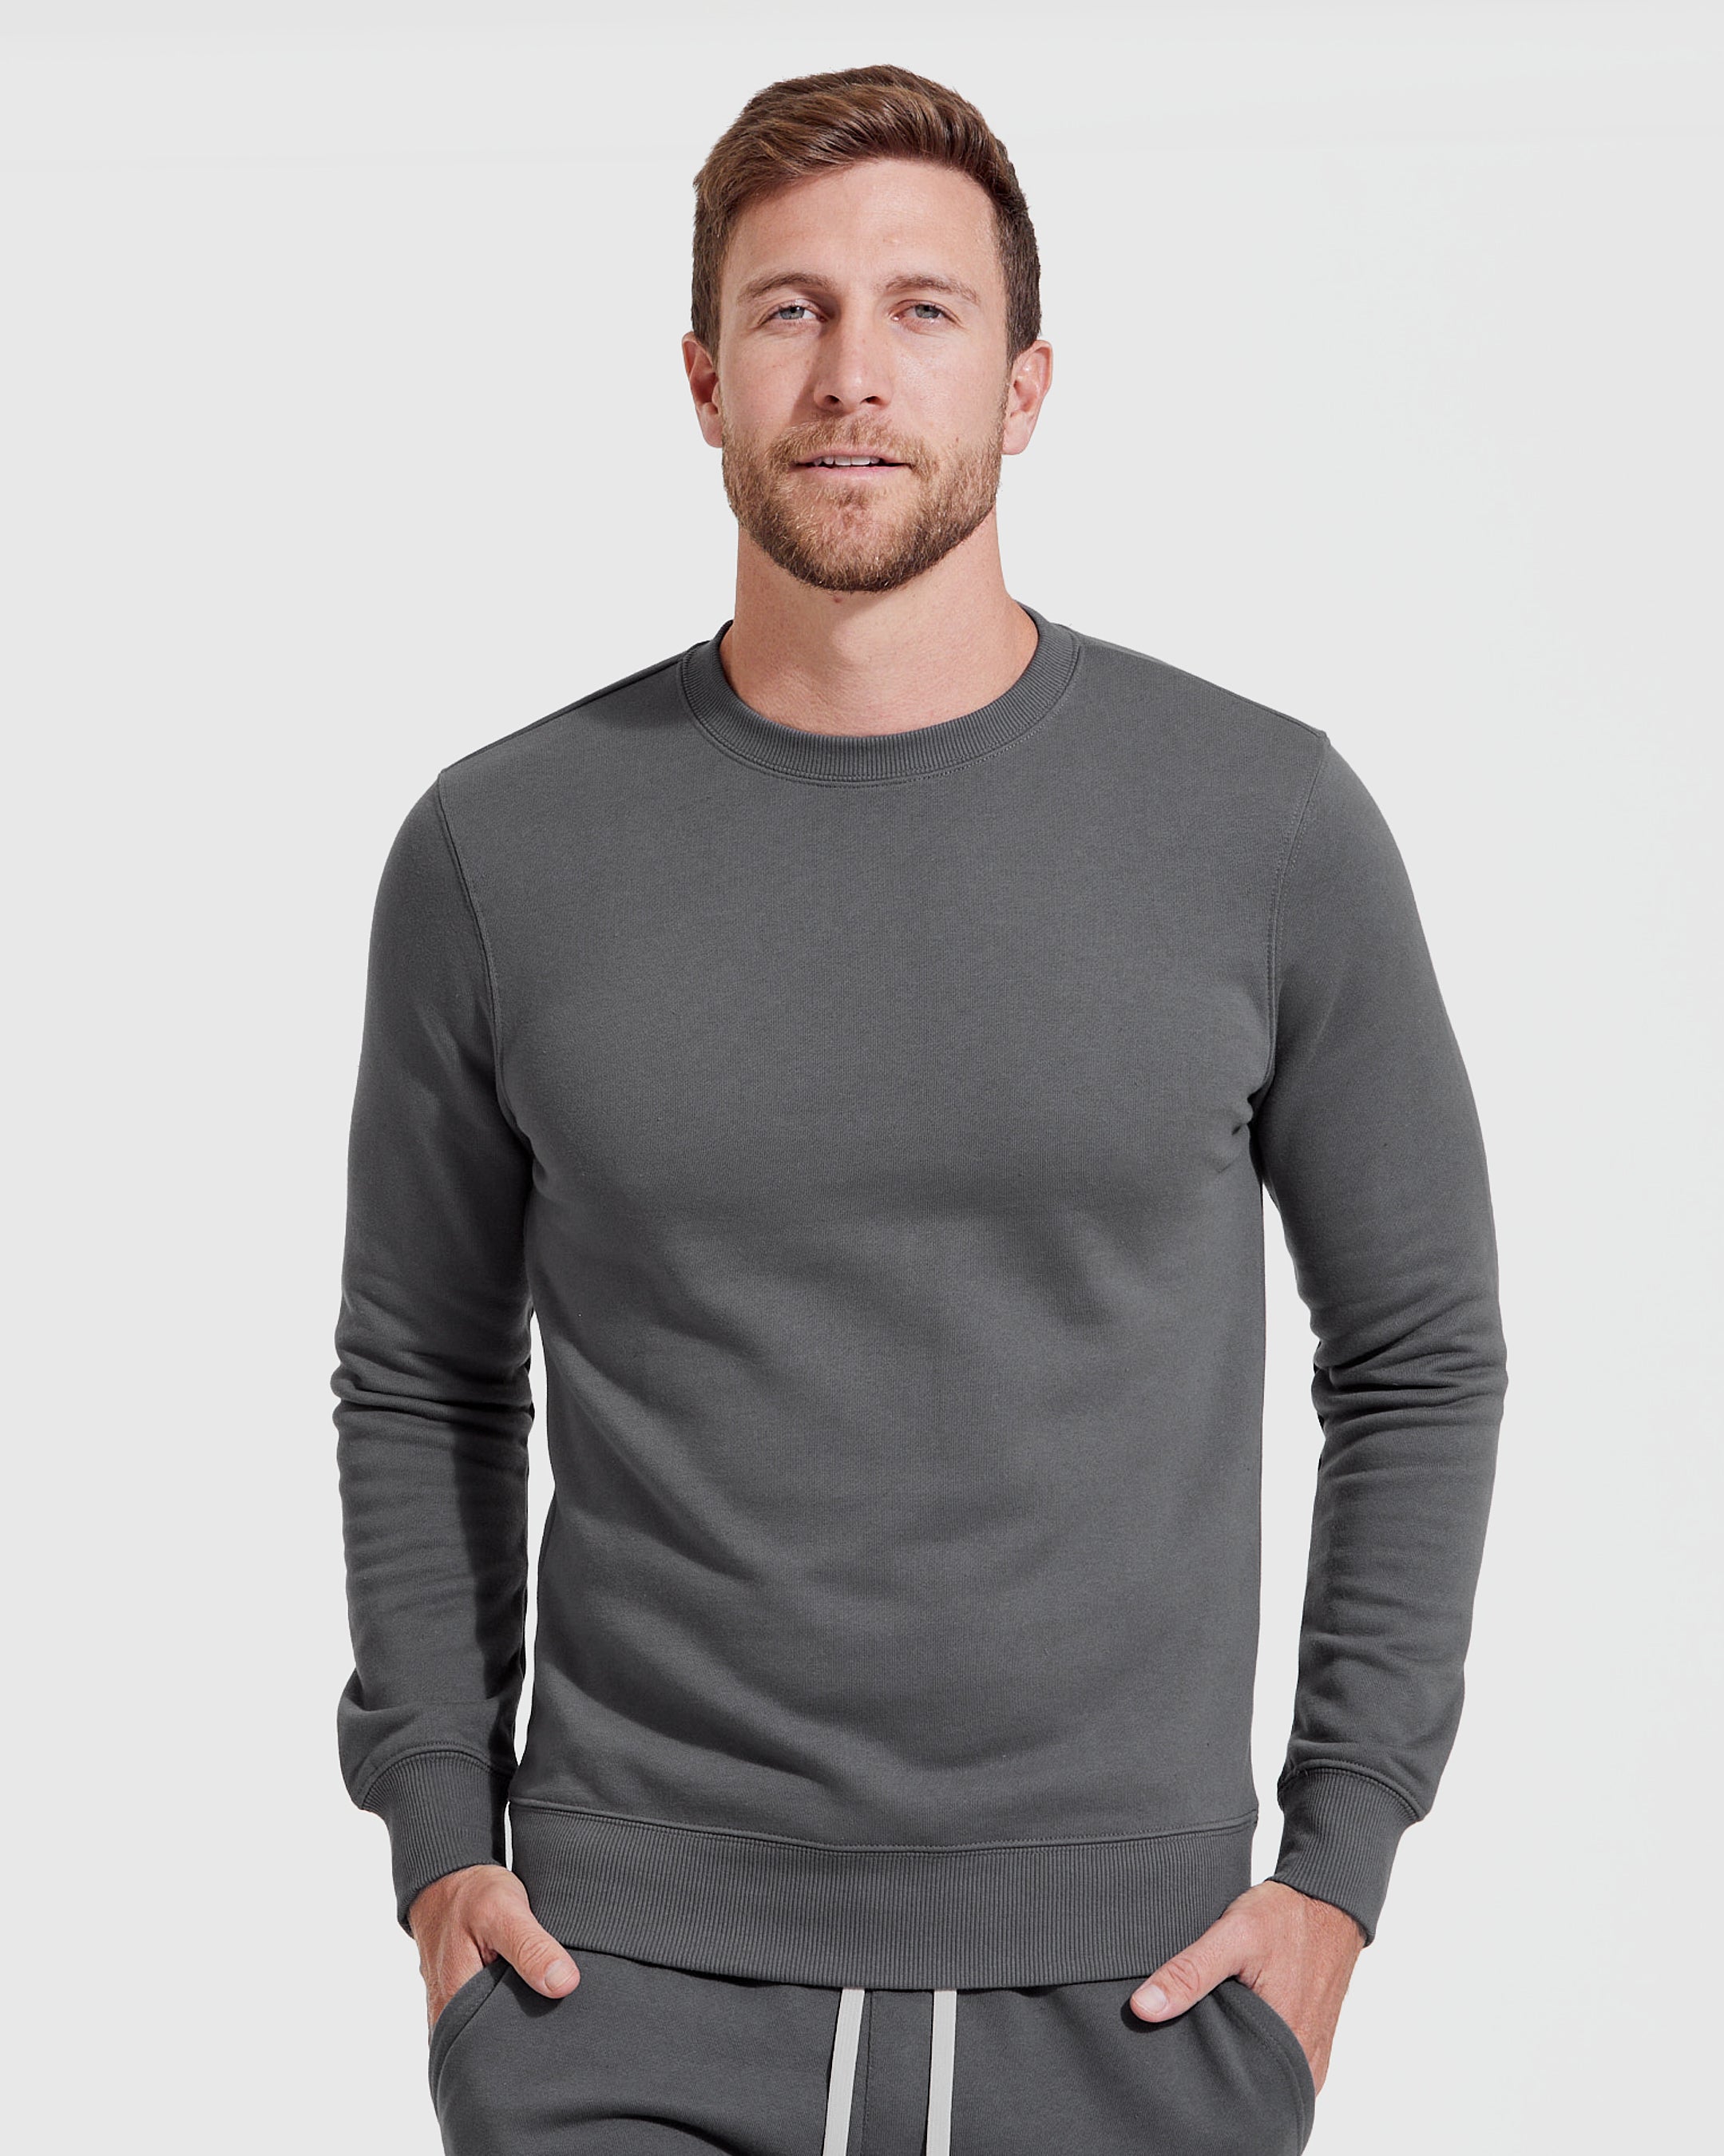 sweatshirts men - Buy sweatshirts men Online Starting at Just ₹102